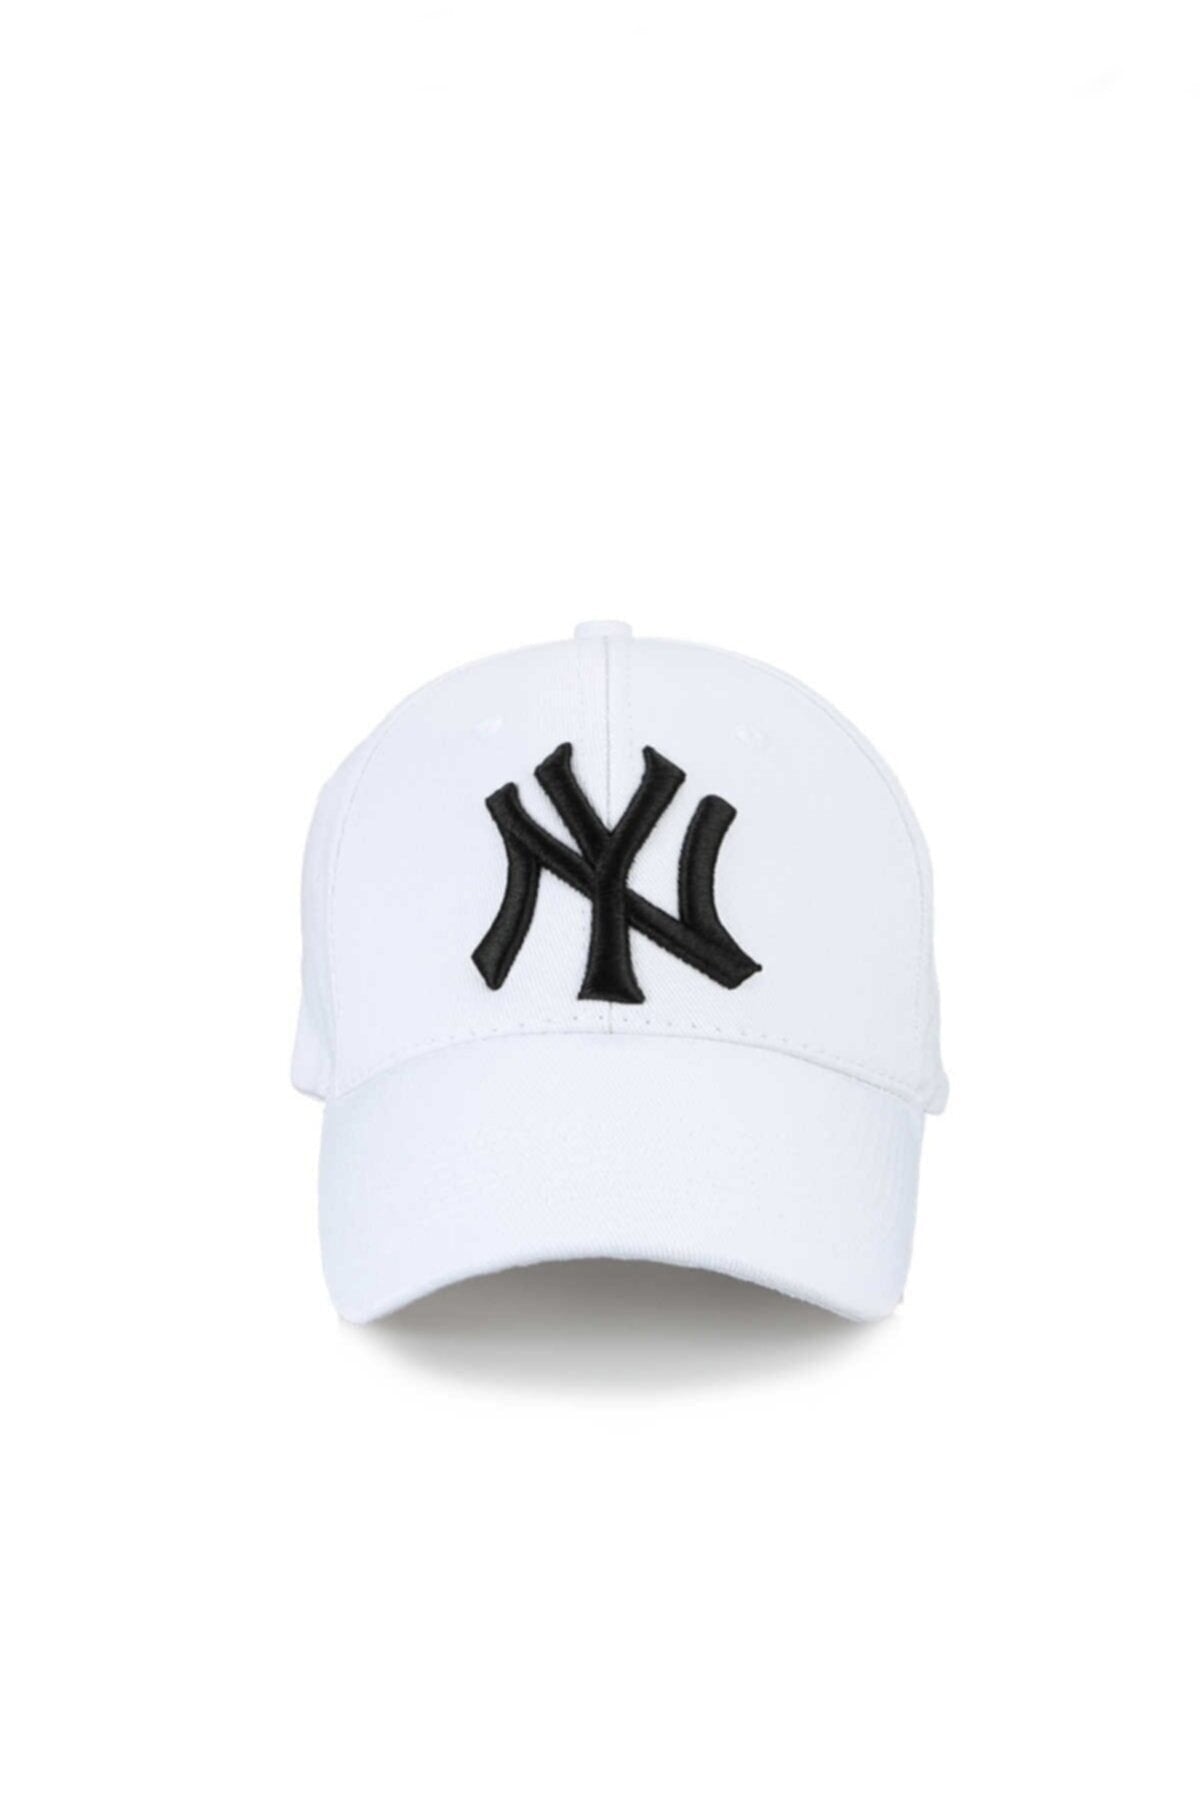 Ny New York 2 Piece Unisex Set Hat Ny Set